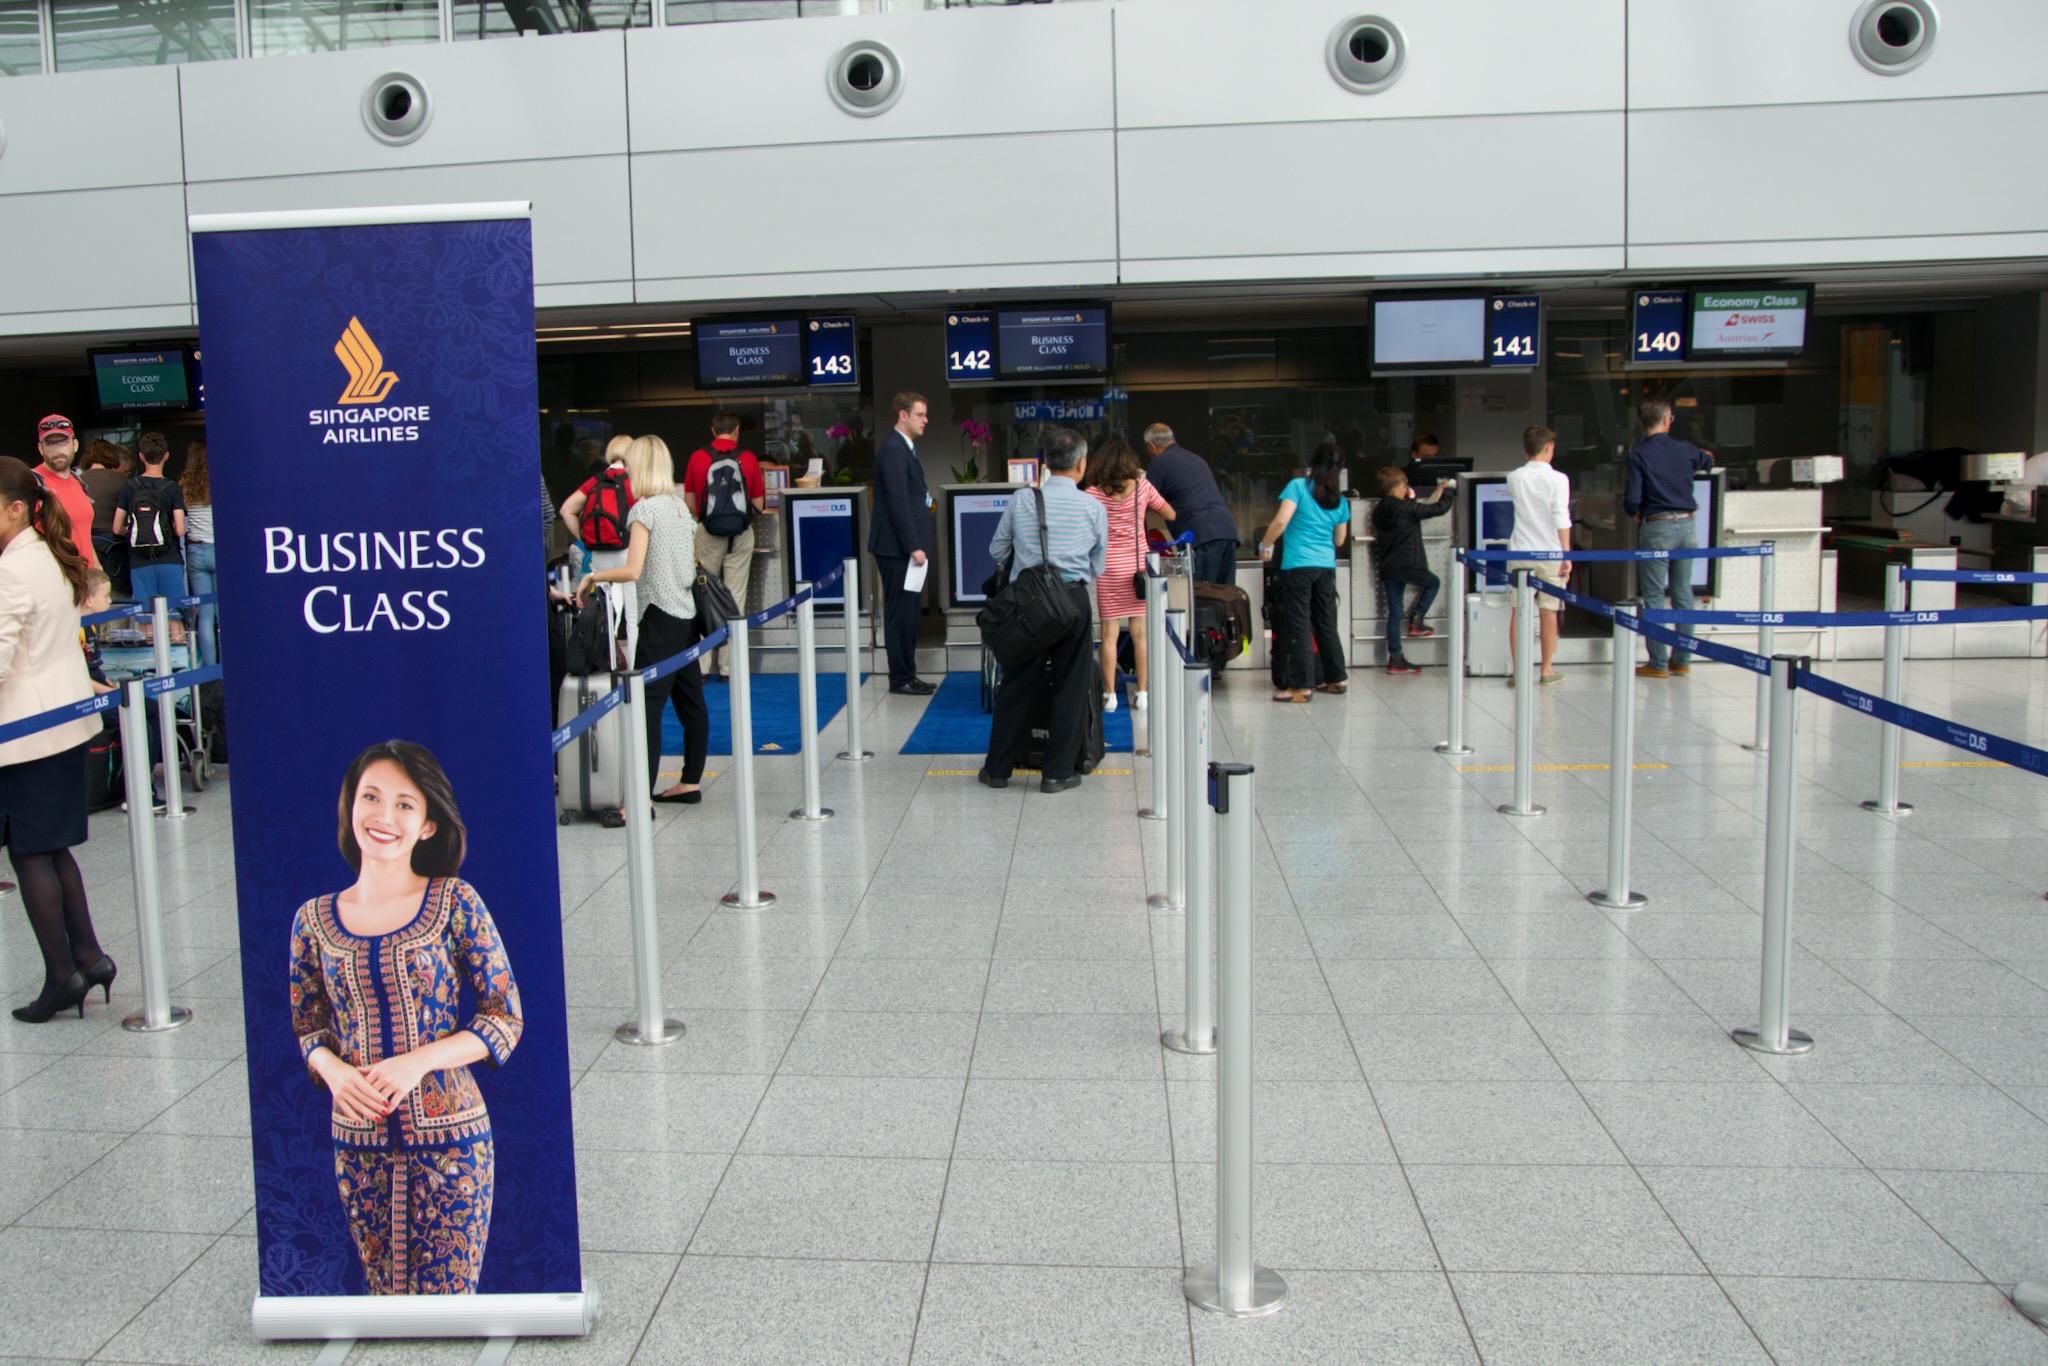 Singapore Airlines Business Class Check-in am Flughafen Düsseldorf